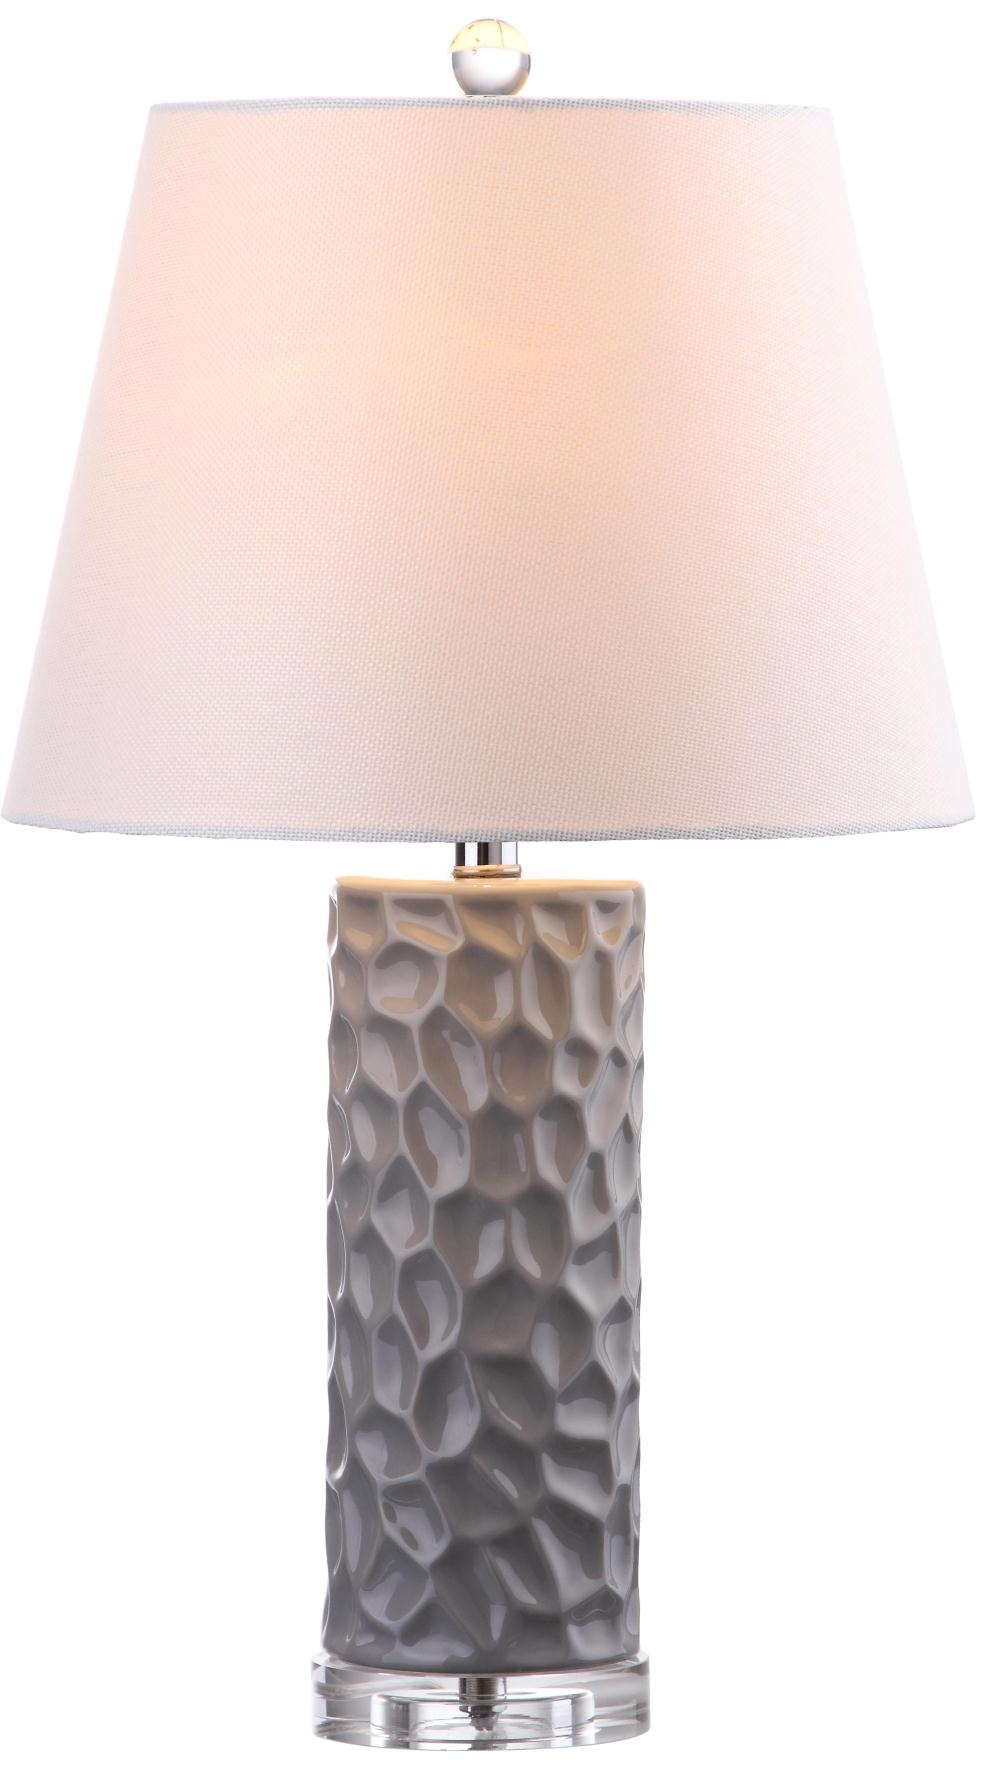 Dixon 23.5-Inch H Table Lamp - Grey - Arlo Home - Image 2